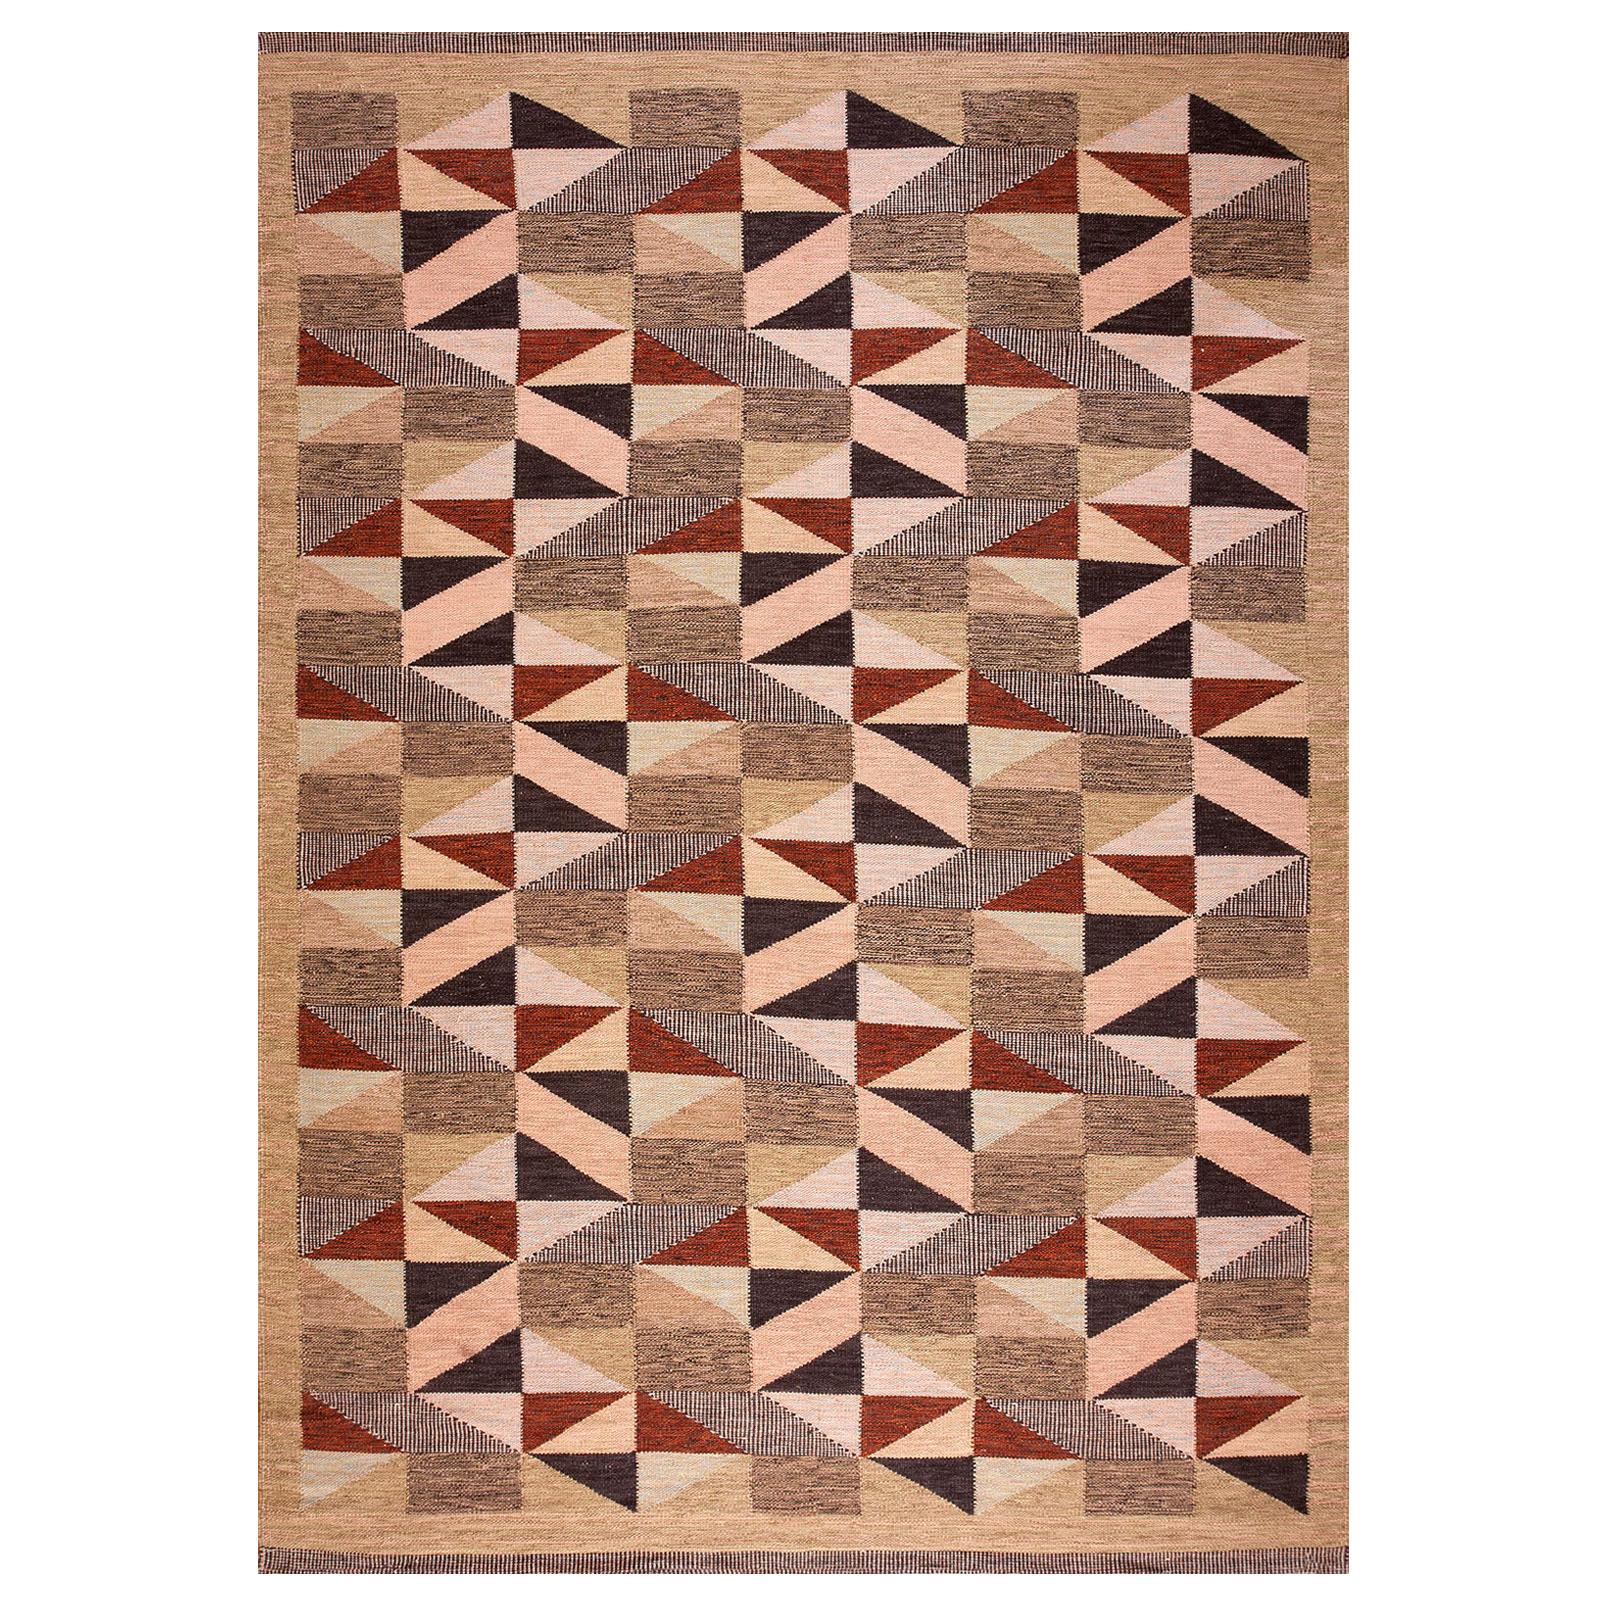 Contemporary Scandia Carpet ( 9' x 12' - 375 x 365 ) For Sale